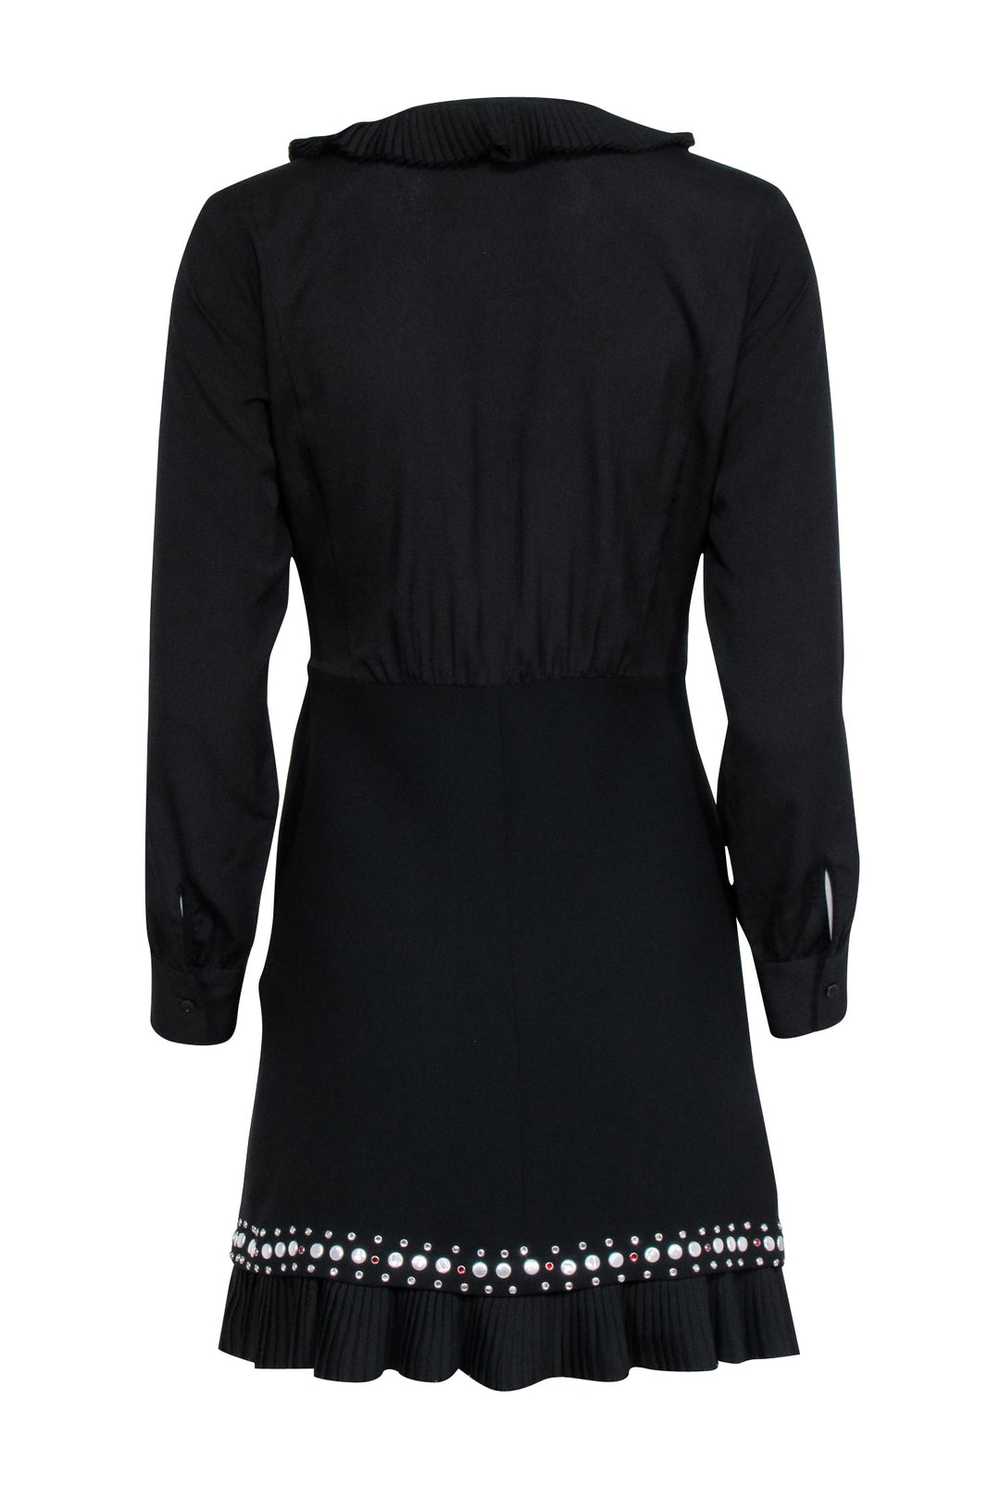 Sandro - Black Long Sleeve Embellished Dress w/ R… - image 3